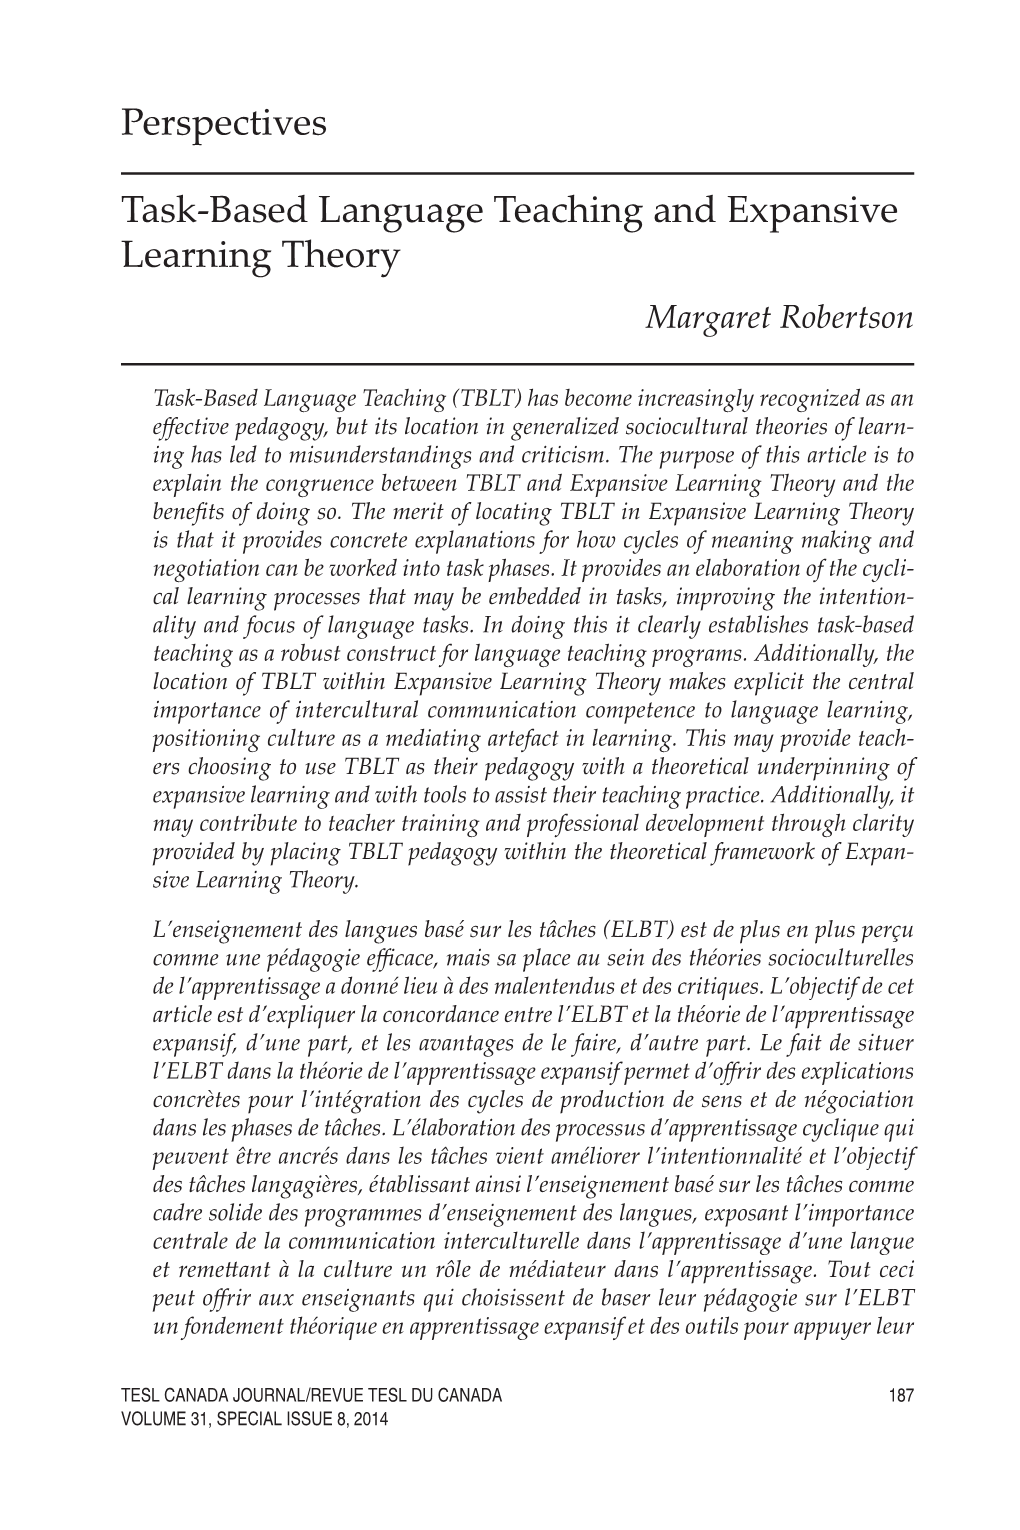 Task-Based Language Teaching and Expansive Learning Theory Margaret Robertson